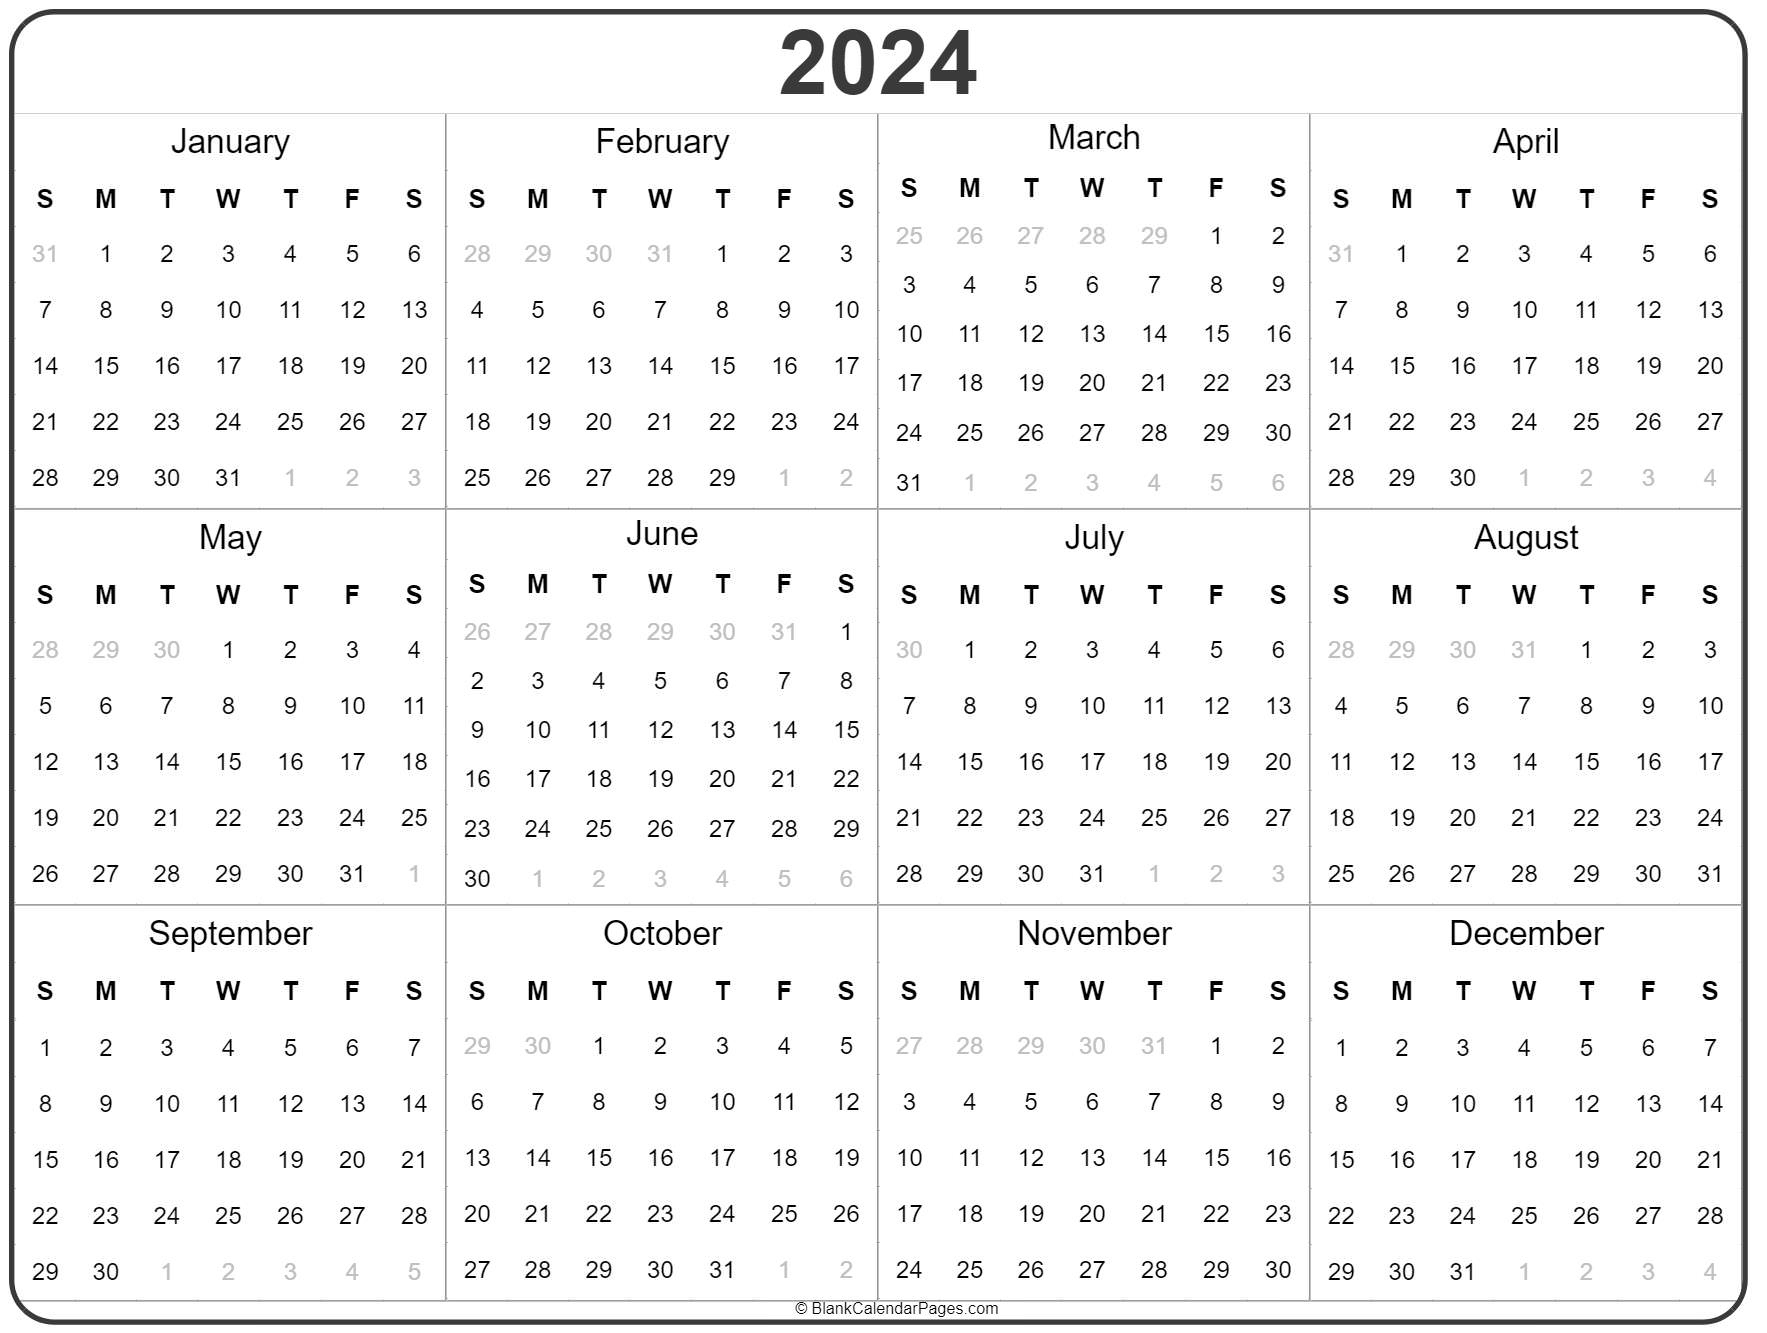 Calendar 2024 Calendar 2024 Uk Free Printable Microsoft Excel - Free Printable 2024 Year Calendar UK